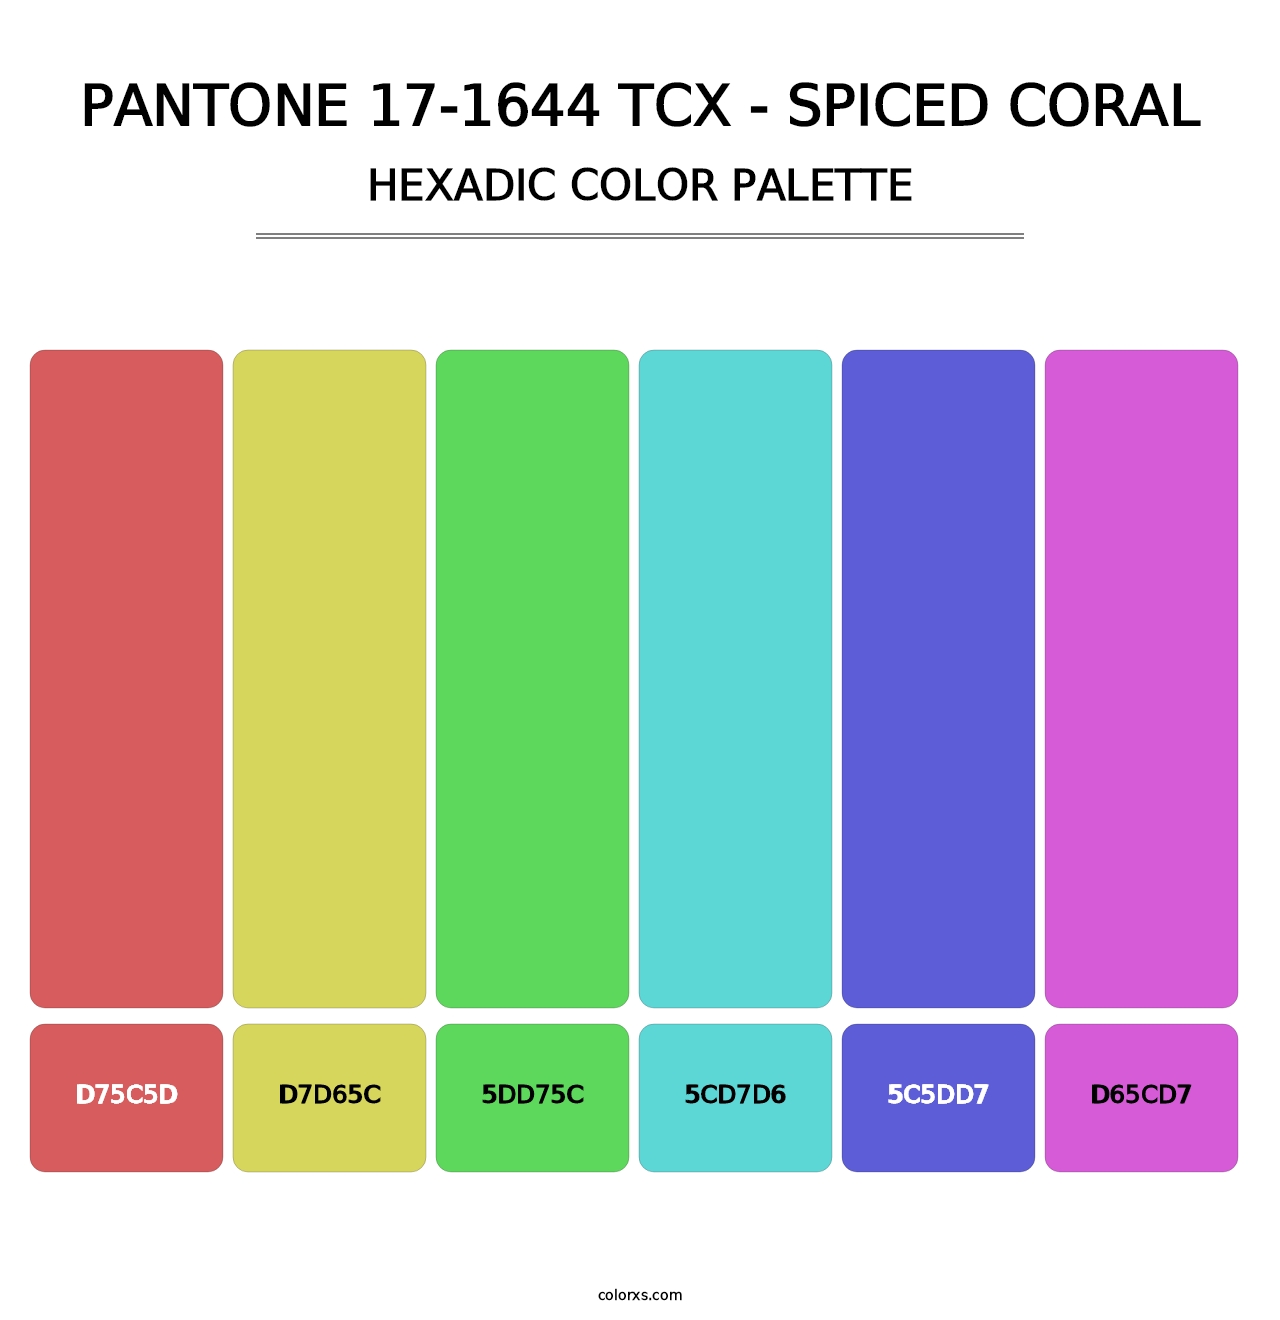 PANTONE 17-1644 TCX - Spiced Coral - Hexadic Color Palette